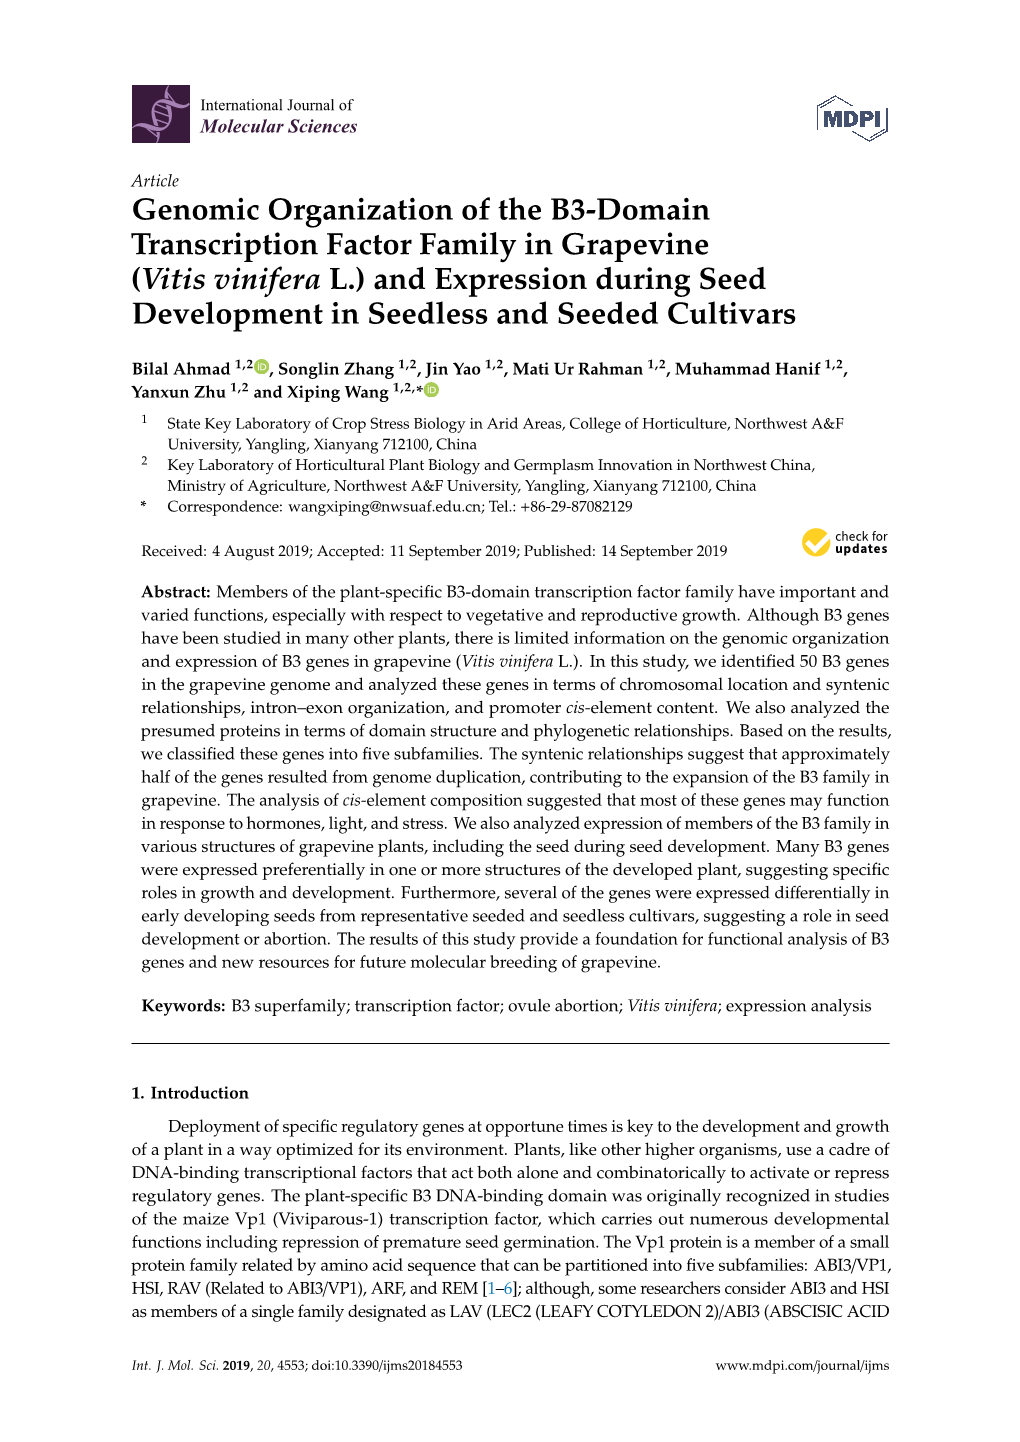 Genomic Organization of the B3-Domain Transcription Factor Family in Grapevine